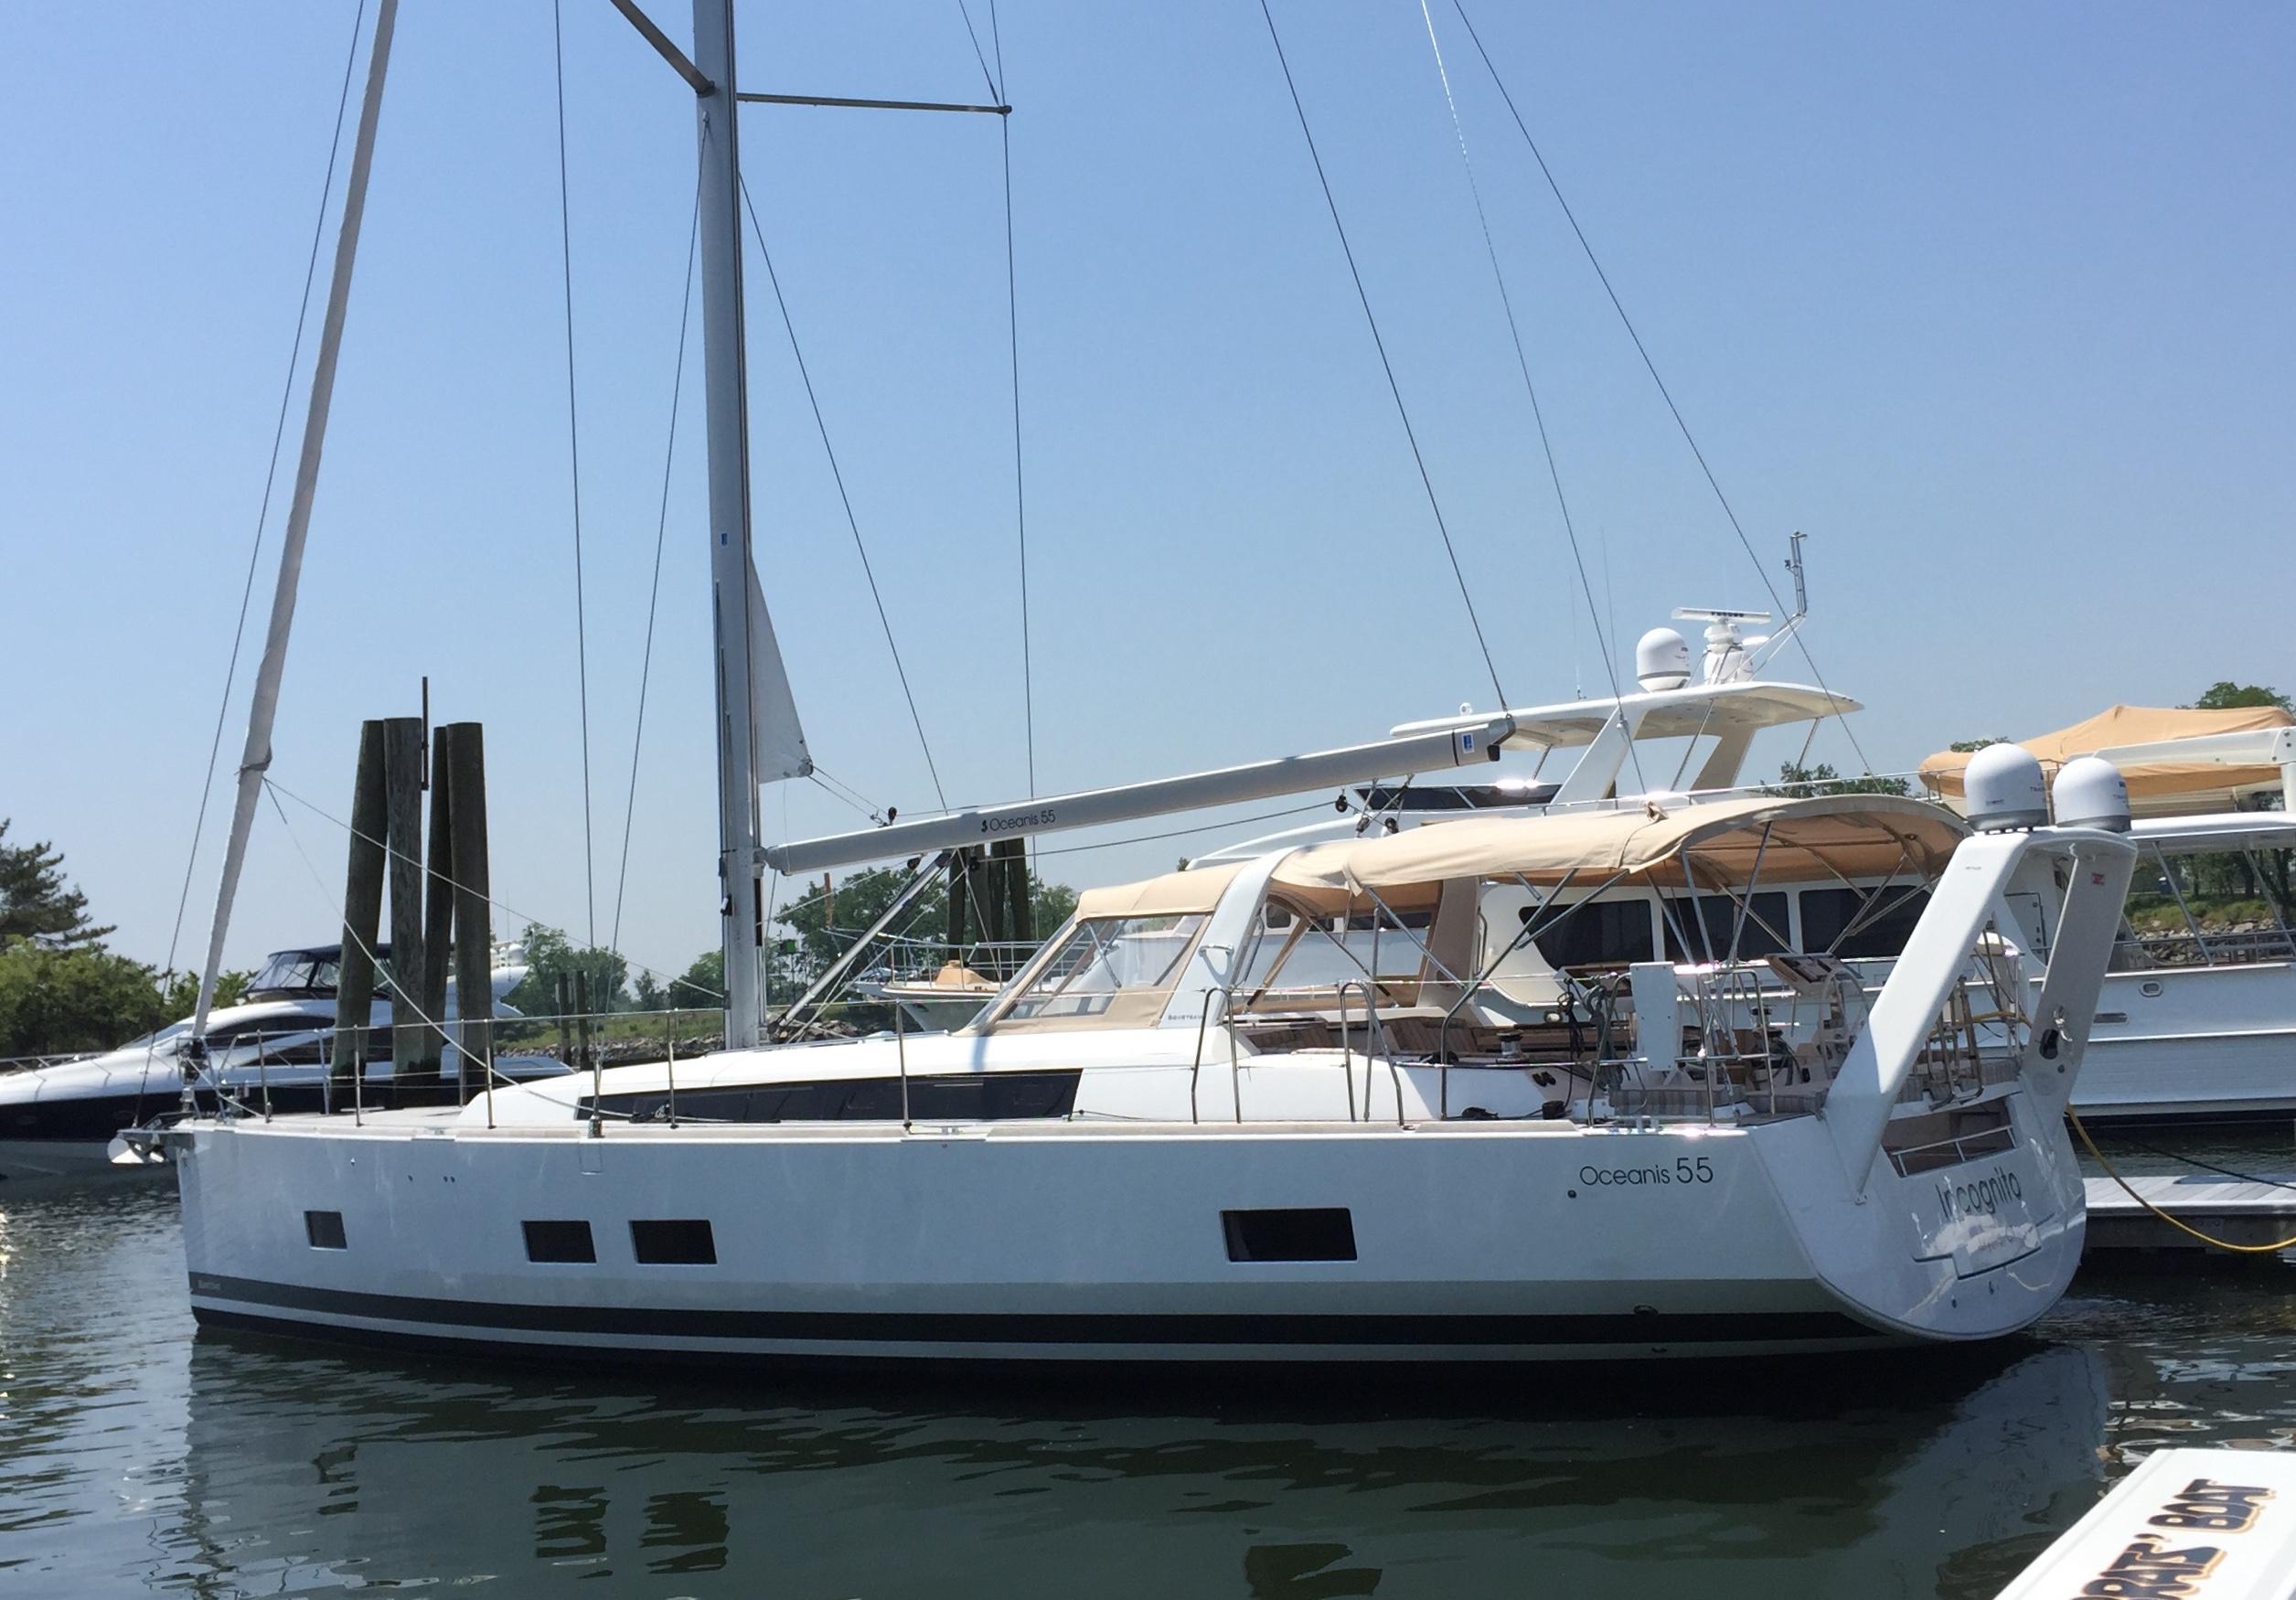 beneteau 55 yacht for sale